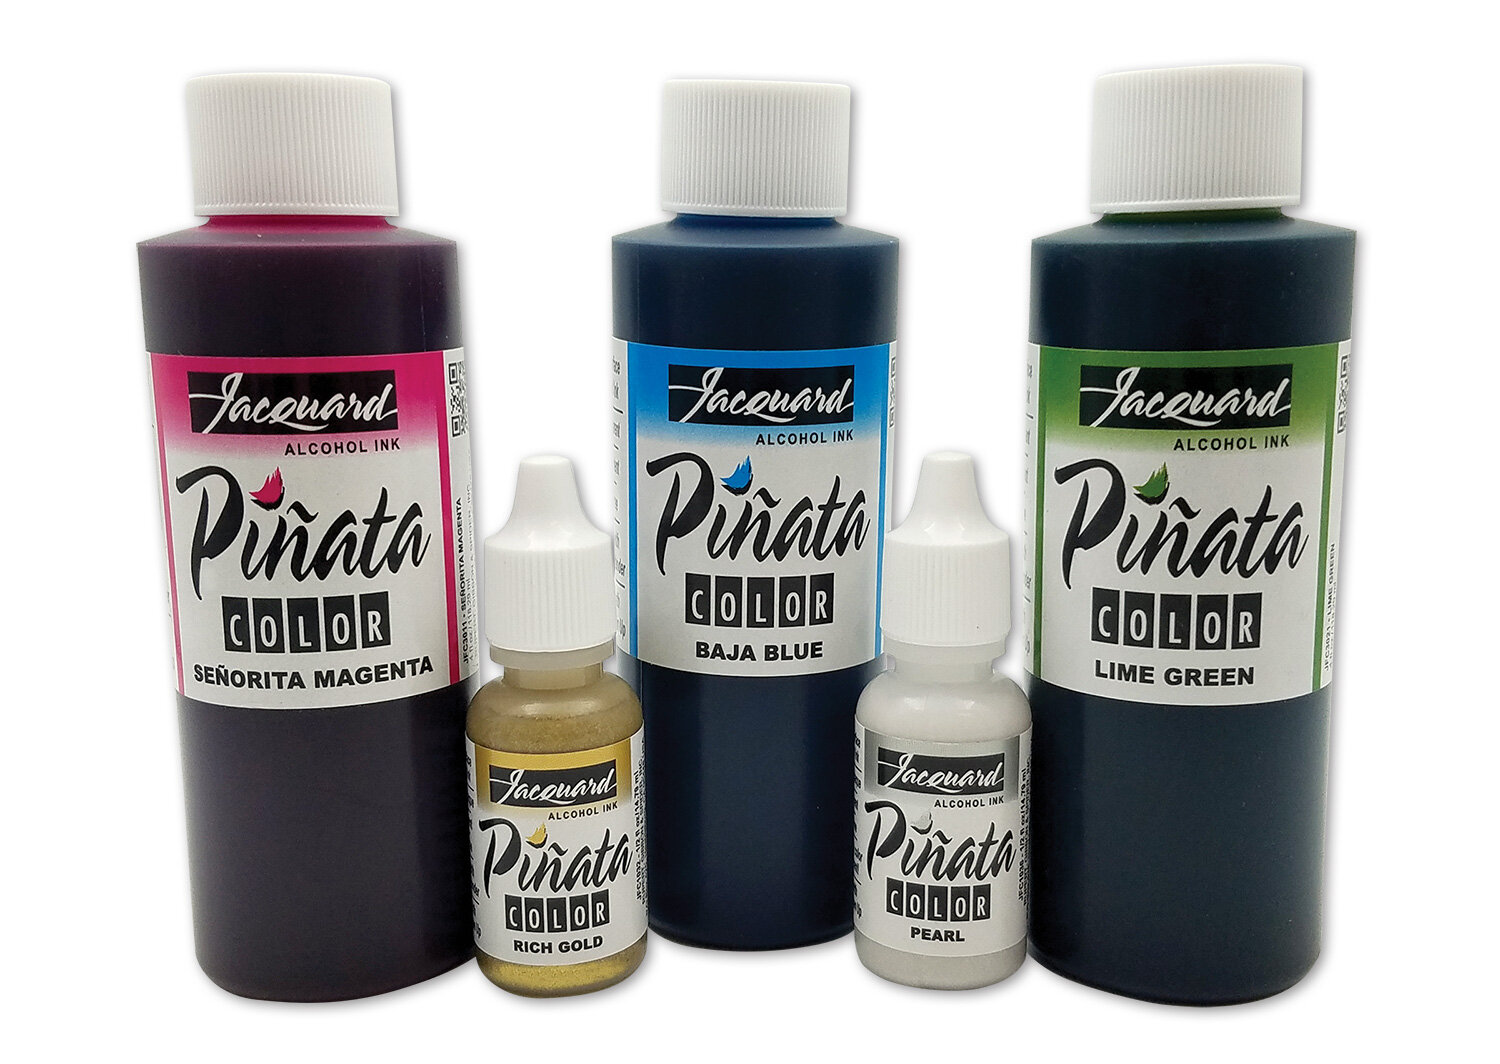 Jacquard Products — Piñata Alcohol Ink